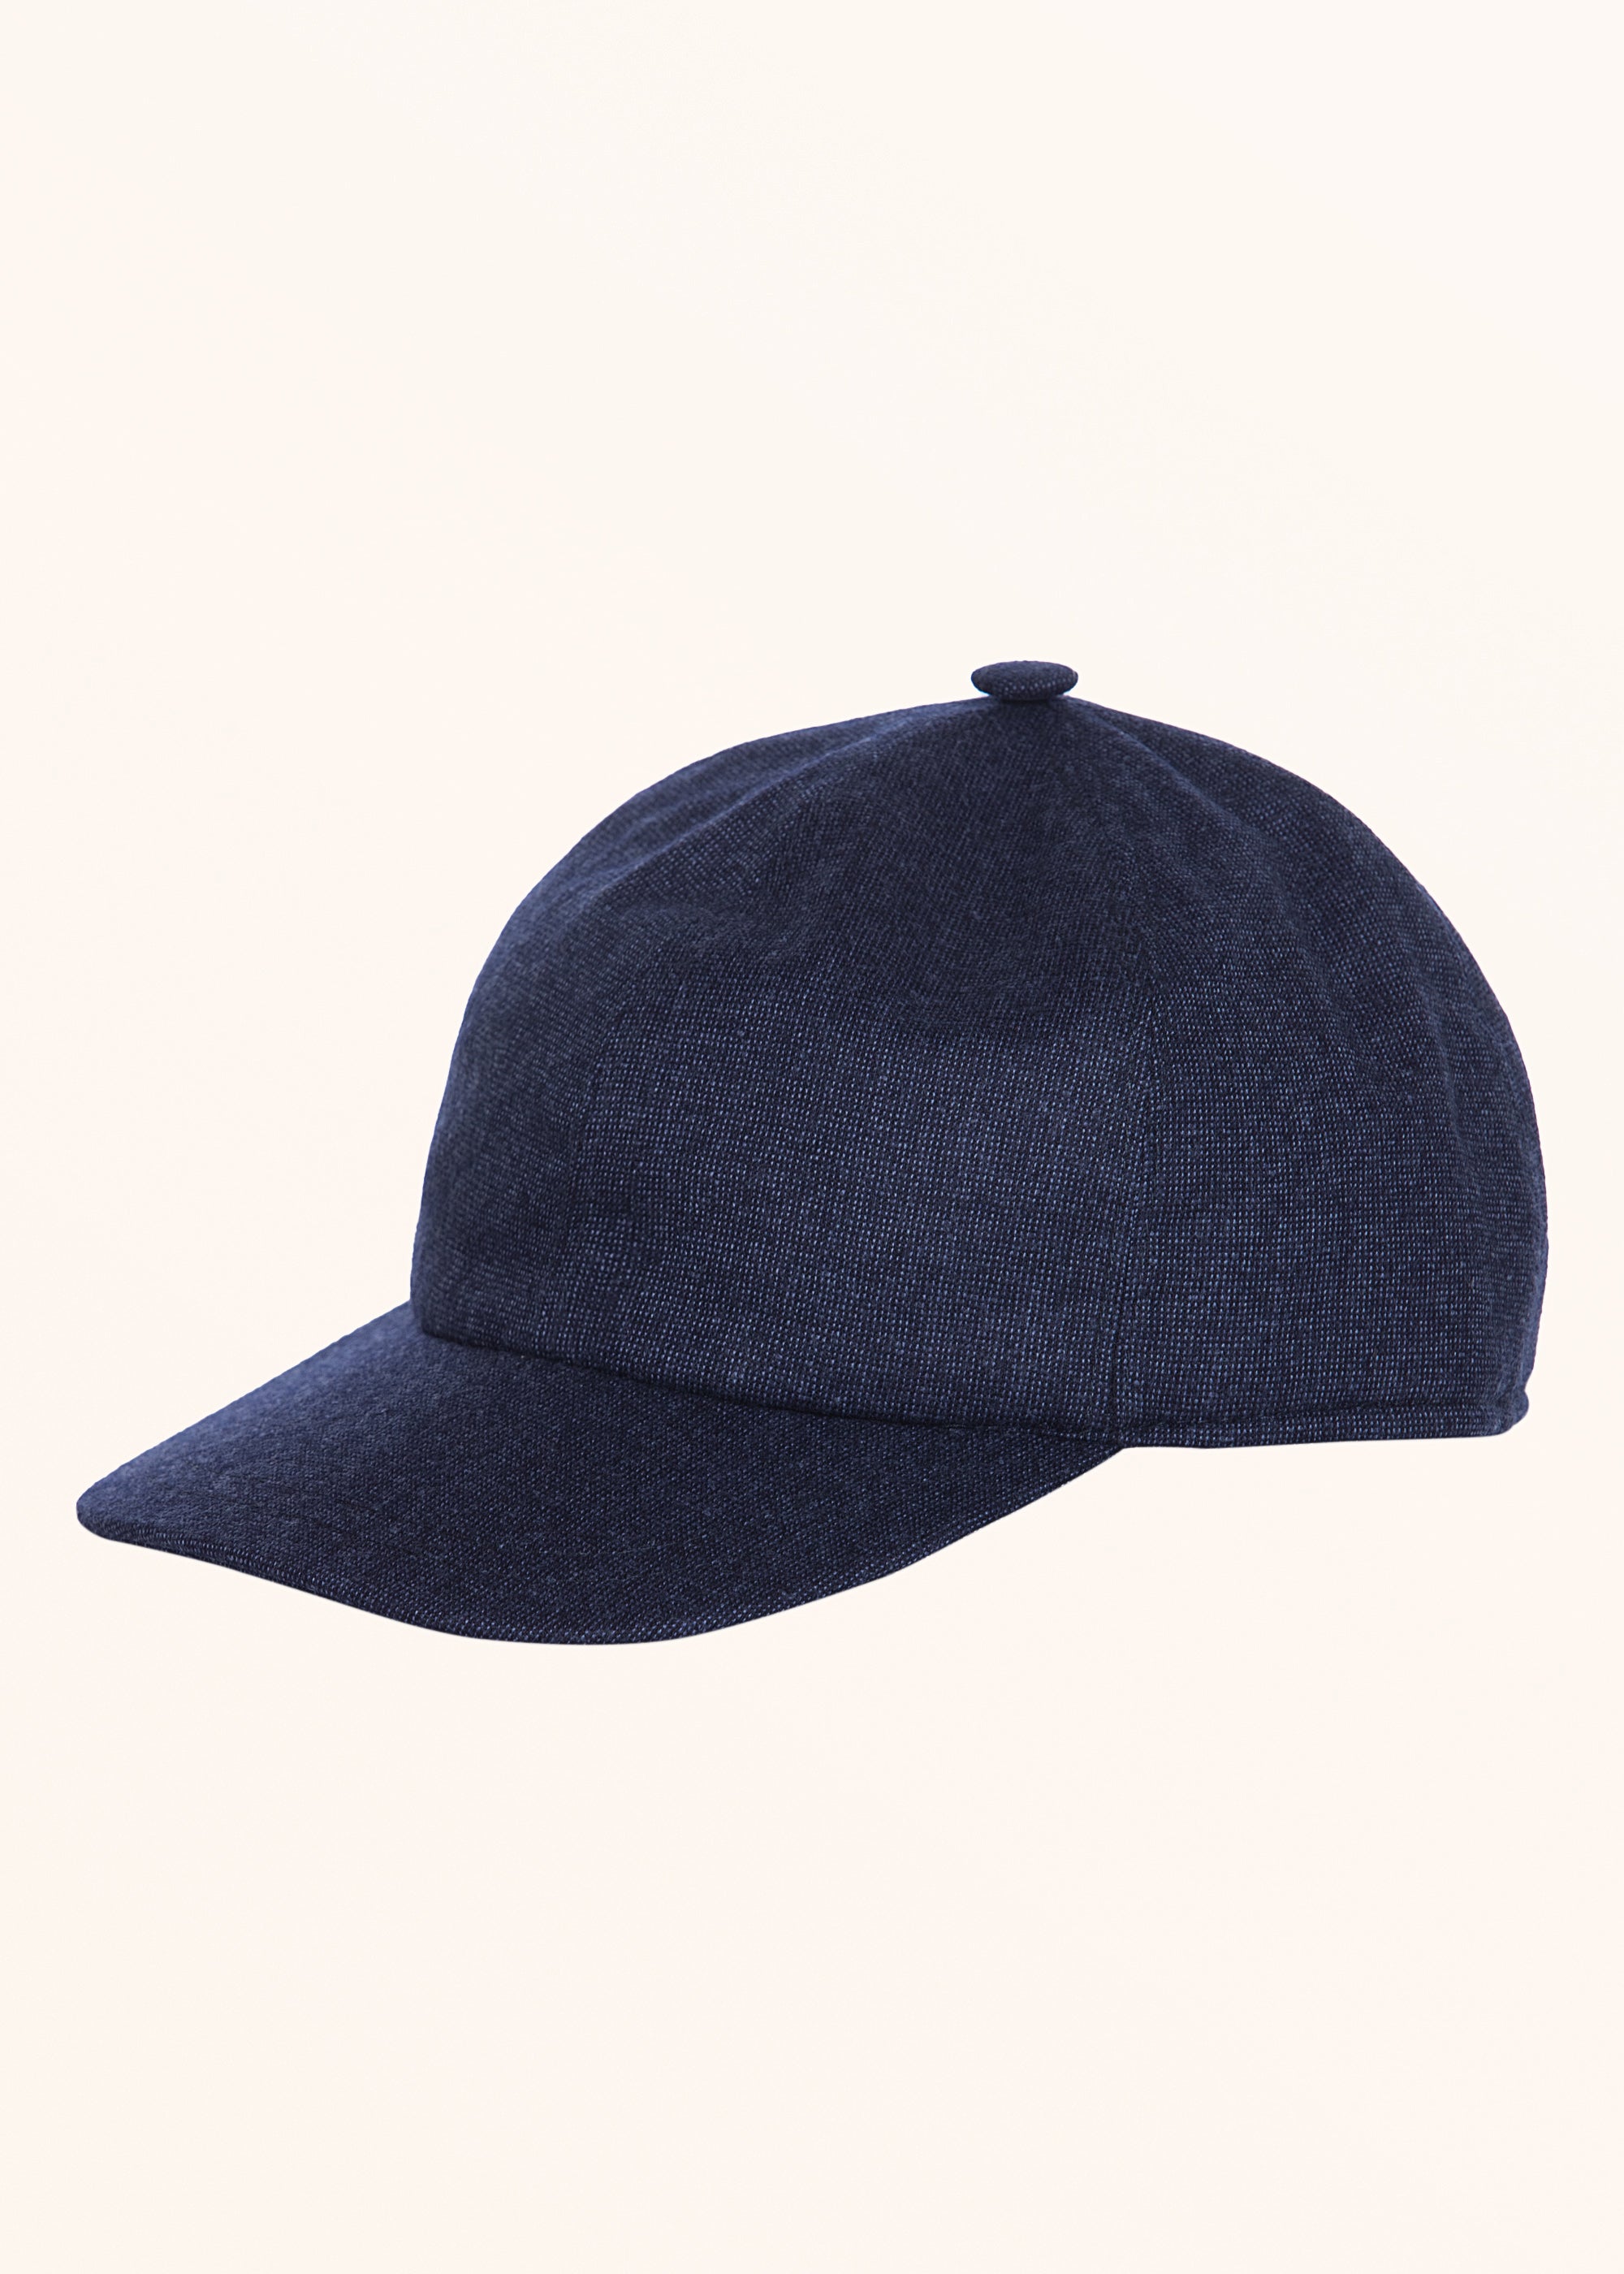 Europe – virgin man, Form for Baseball in wool Kiton Adjustable Hat